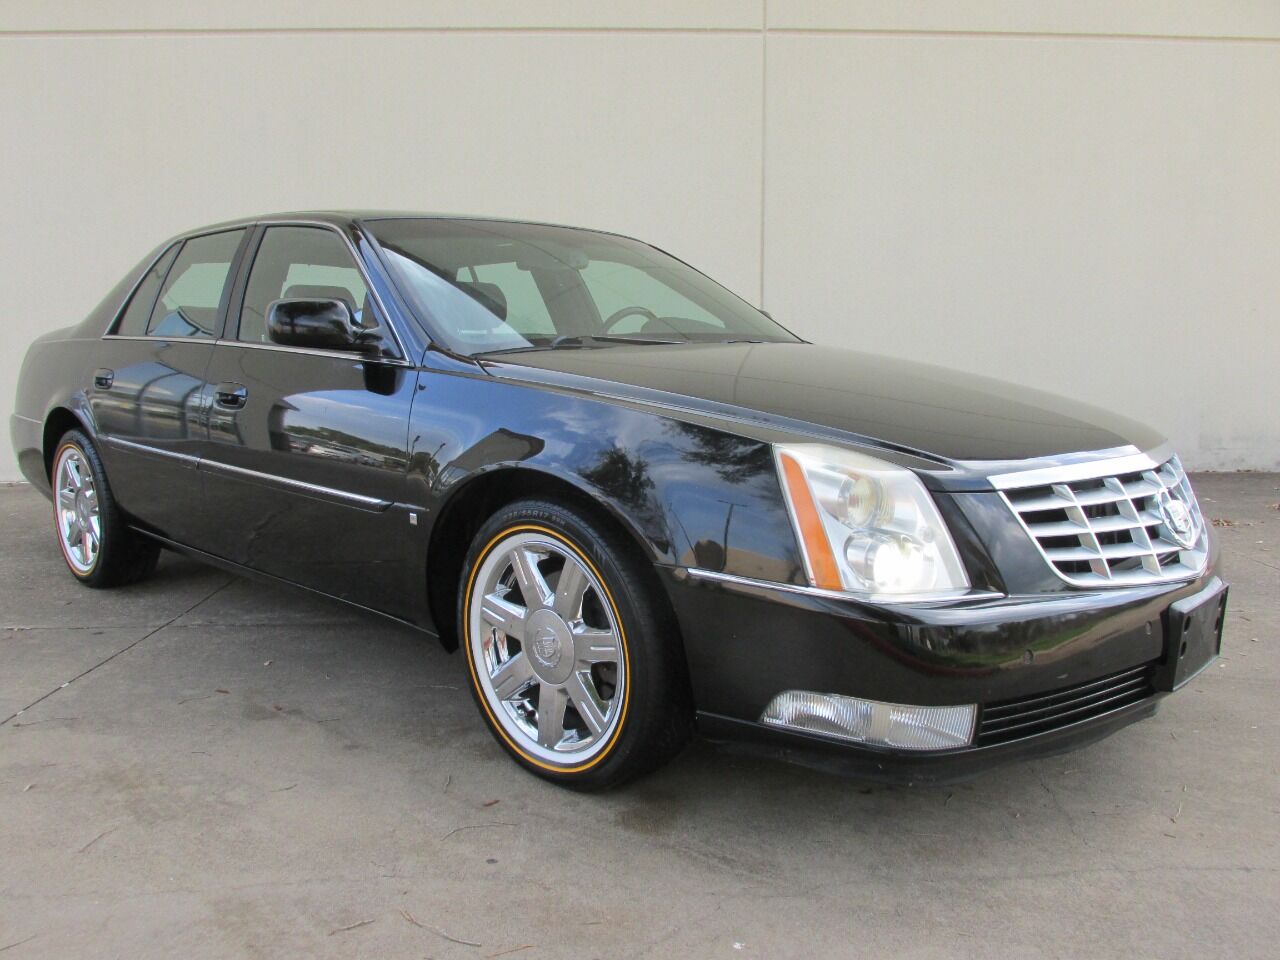 2007 Cadillac DTS For Sale - Carsforsale.com®